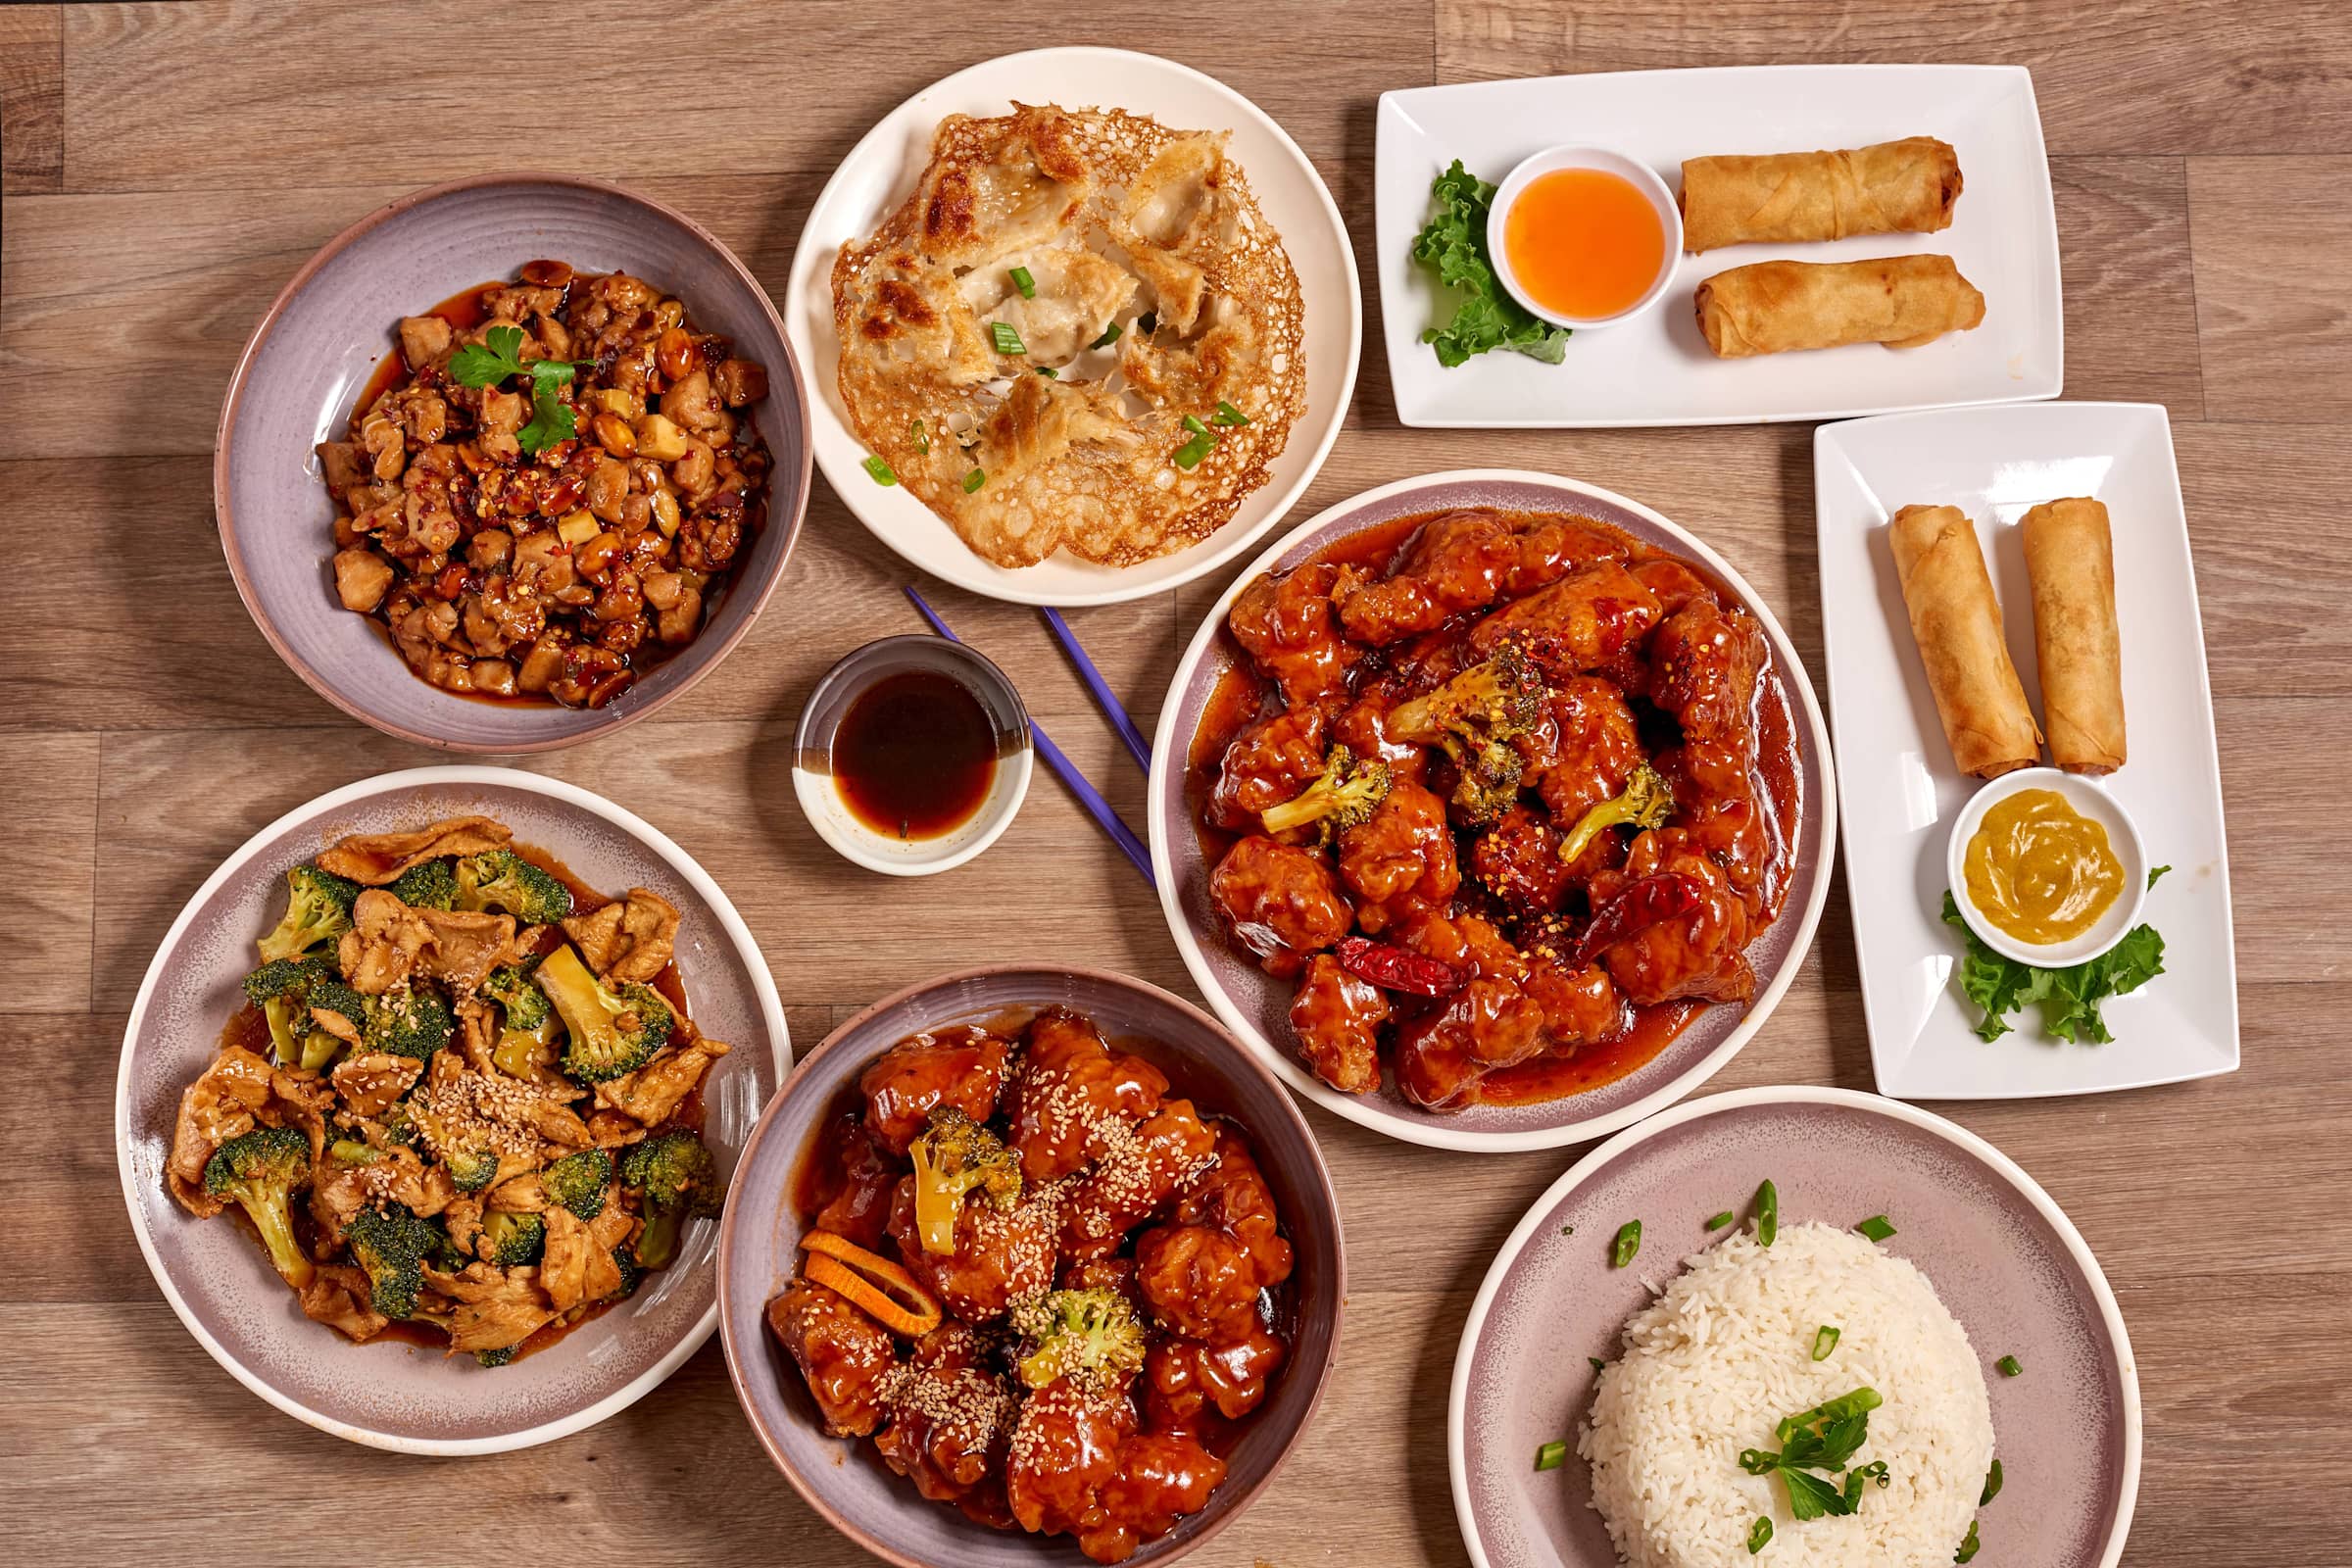 Hunan dynasty menu